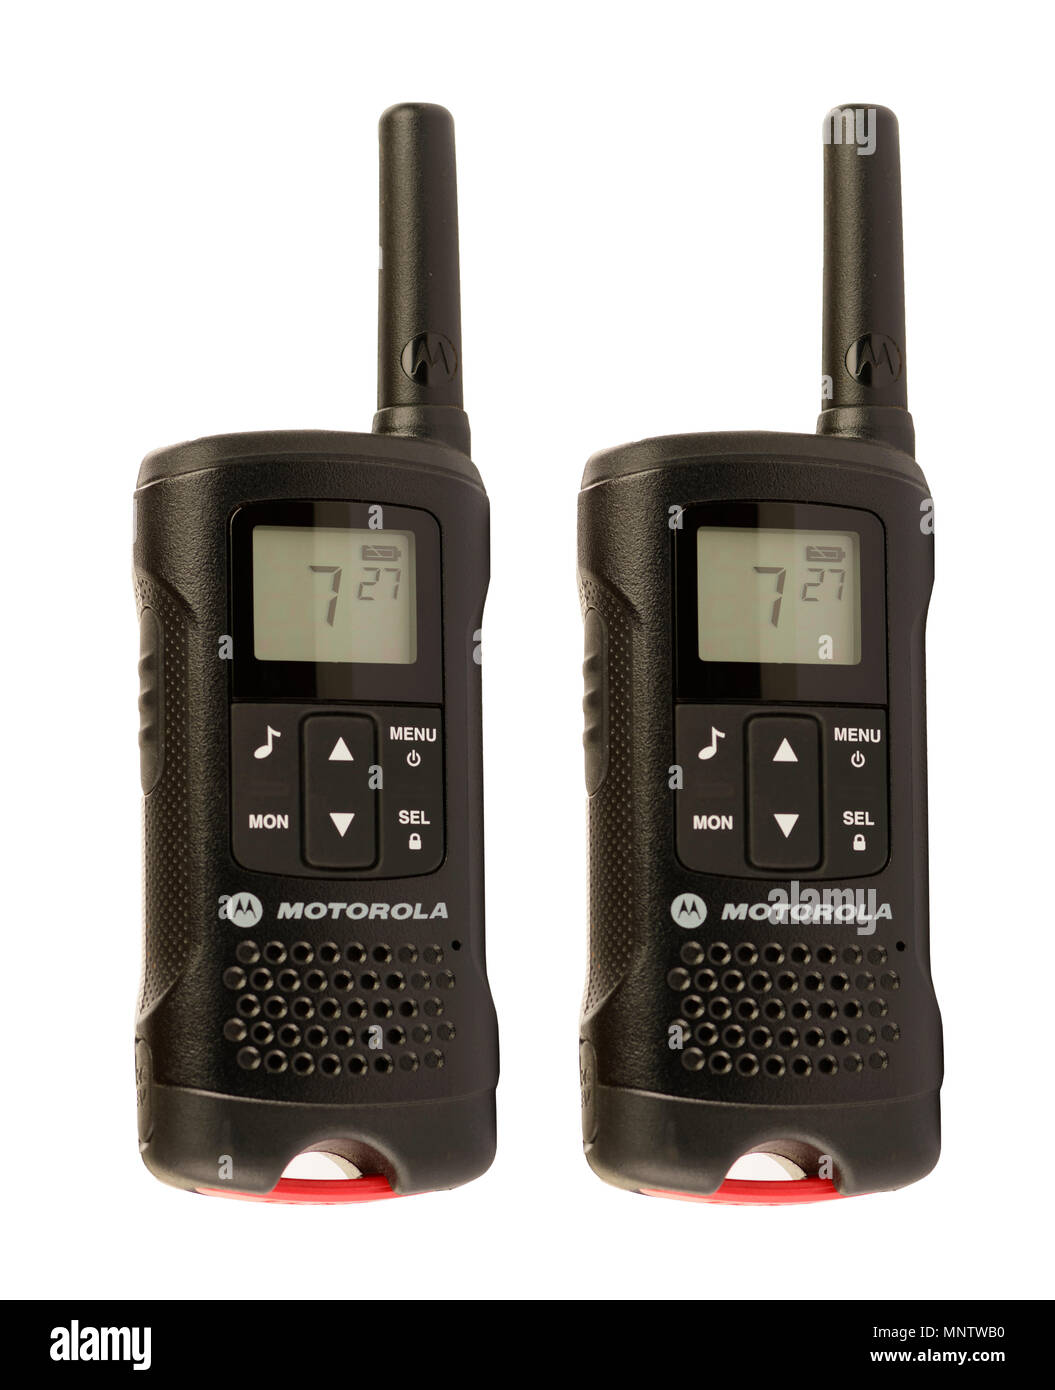 cut out image of a pair of motorola walkie talkies Stock Photo